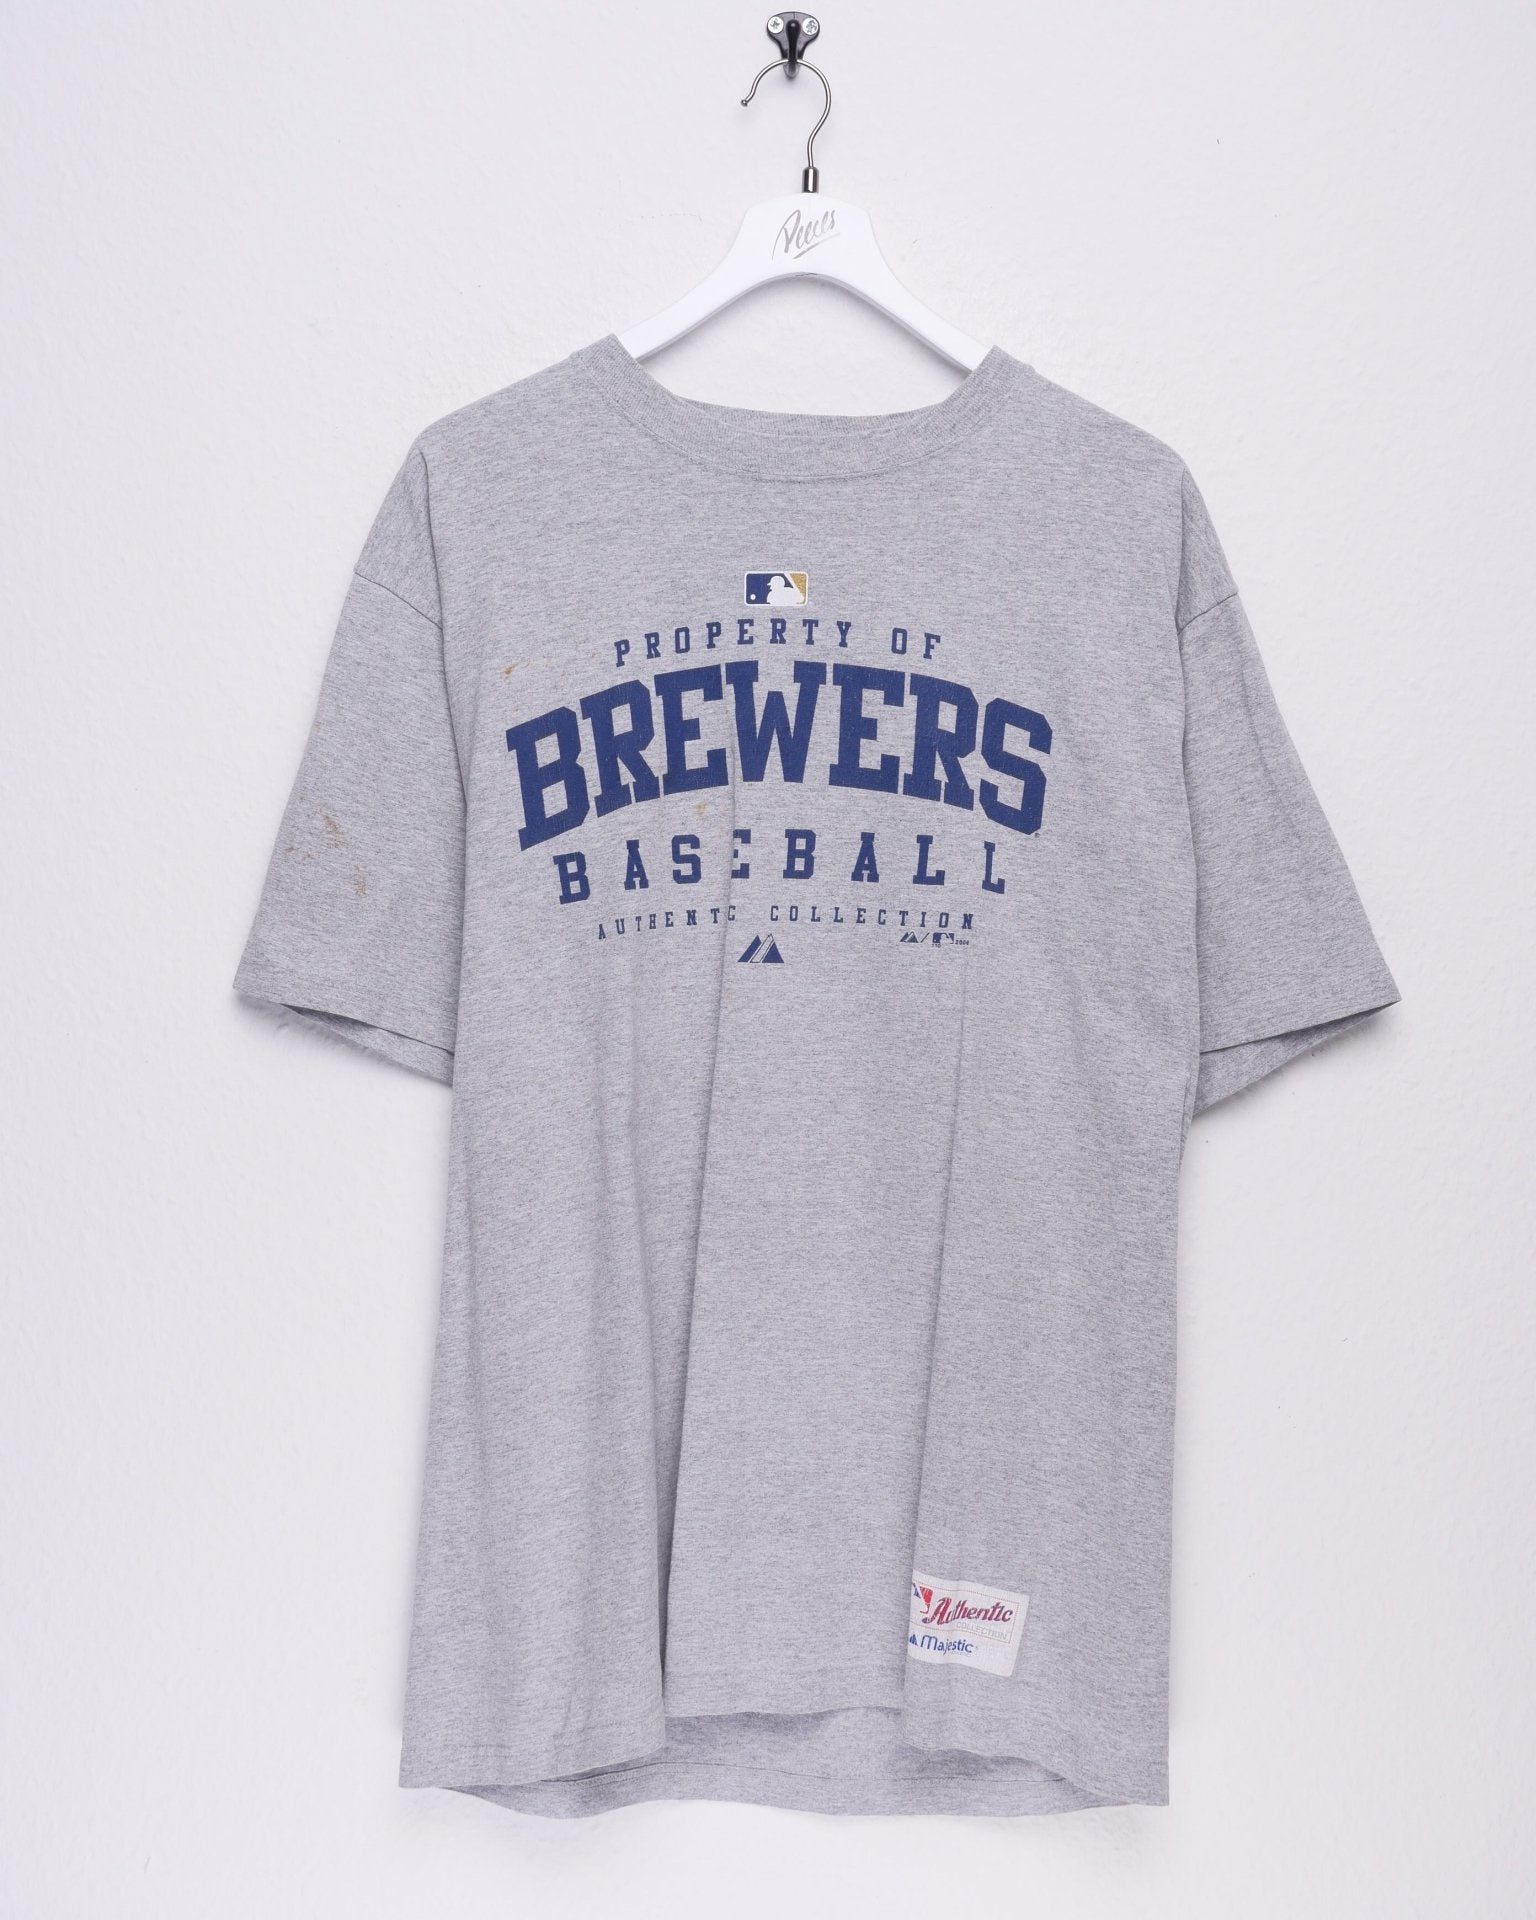 Brewers Baseball printed Graphic grey Shirt - Peeces